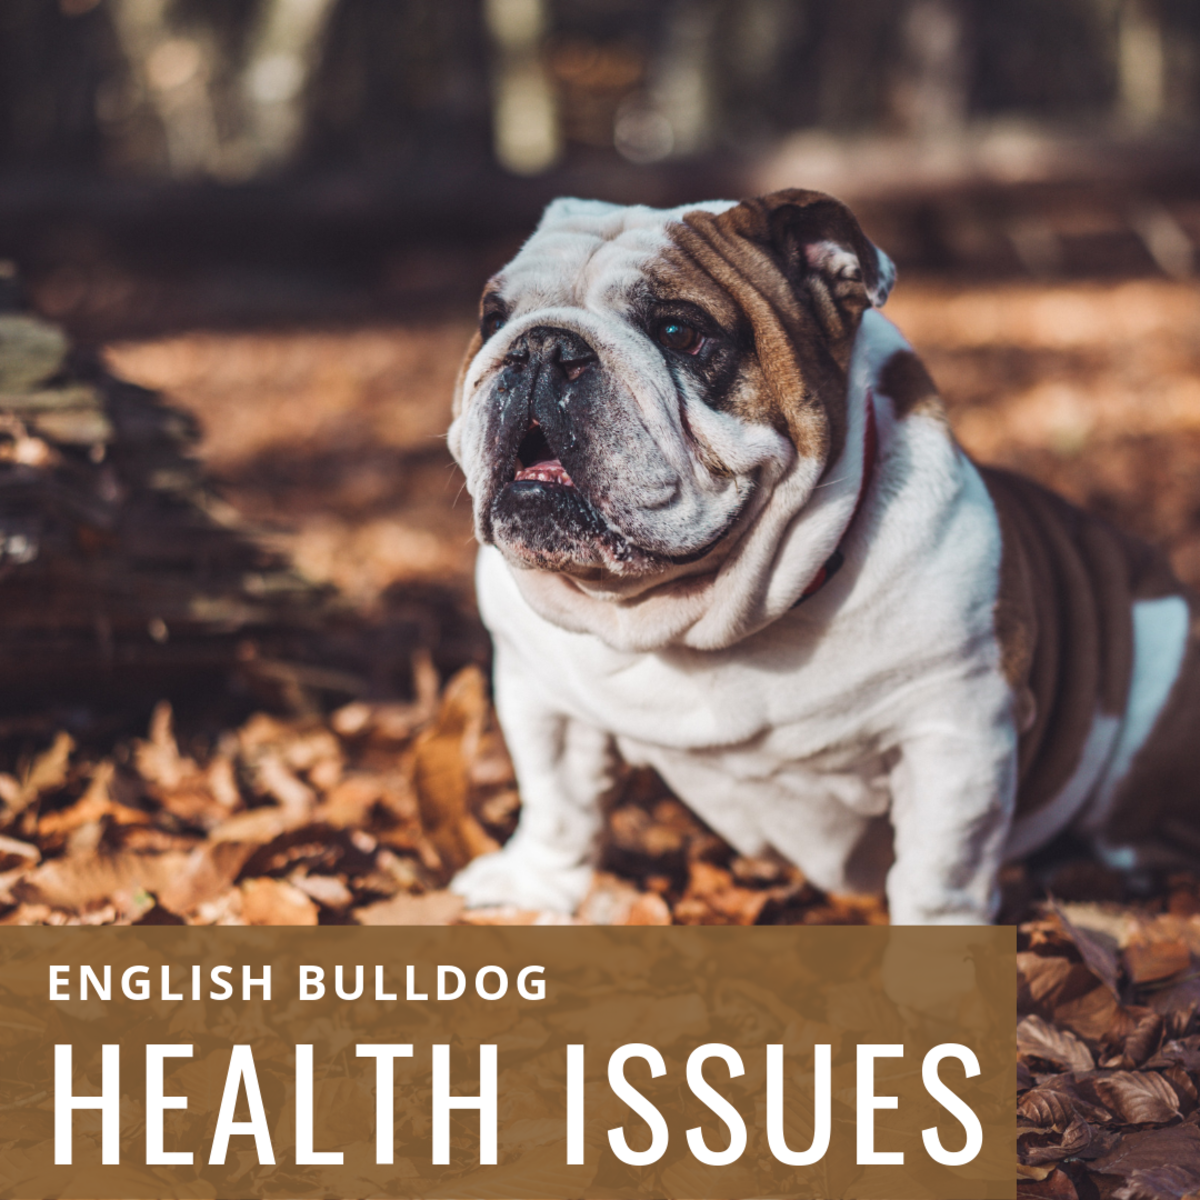 Raising Awareness About English Bulldog Health Issues